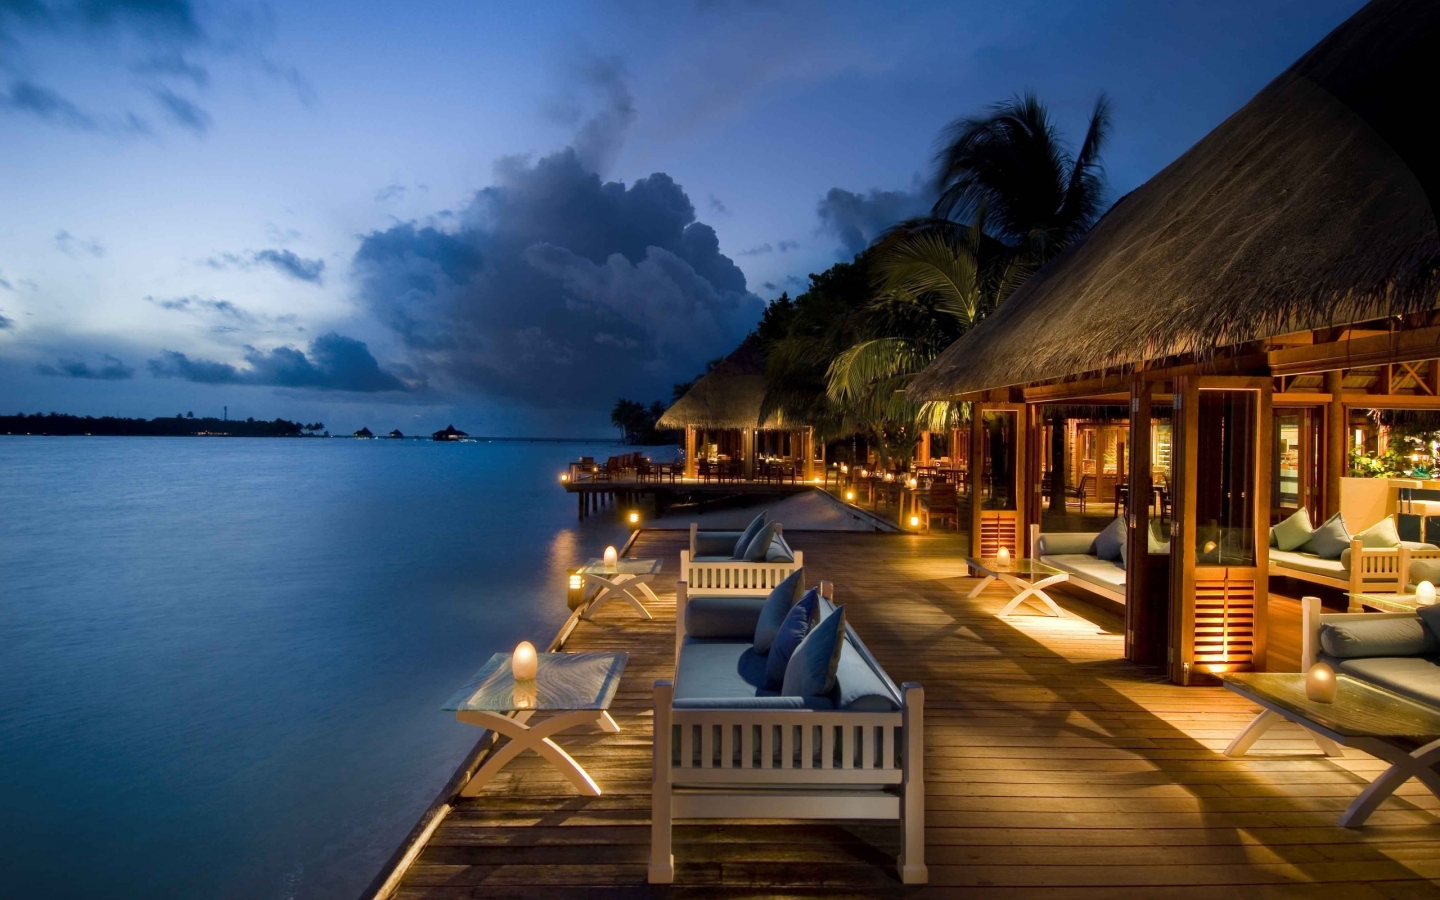 Sea Resort for 1440 x 900 widescreen resolution